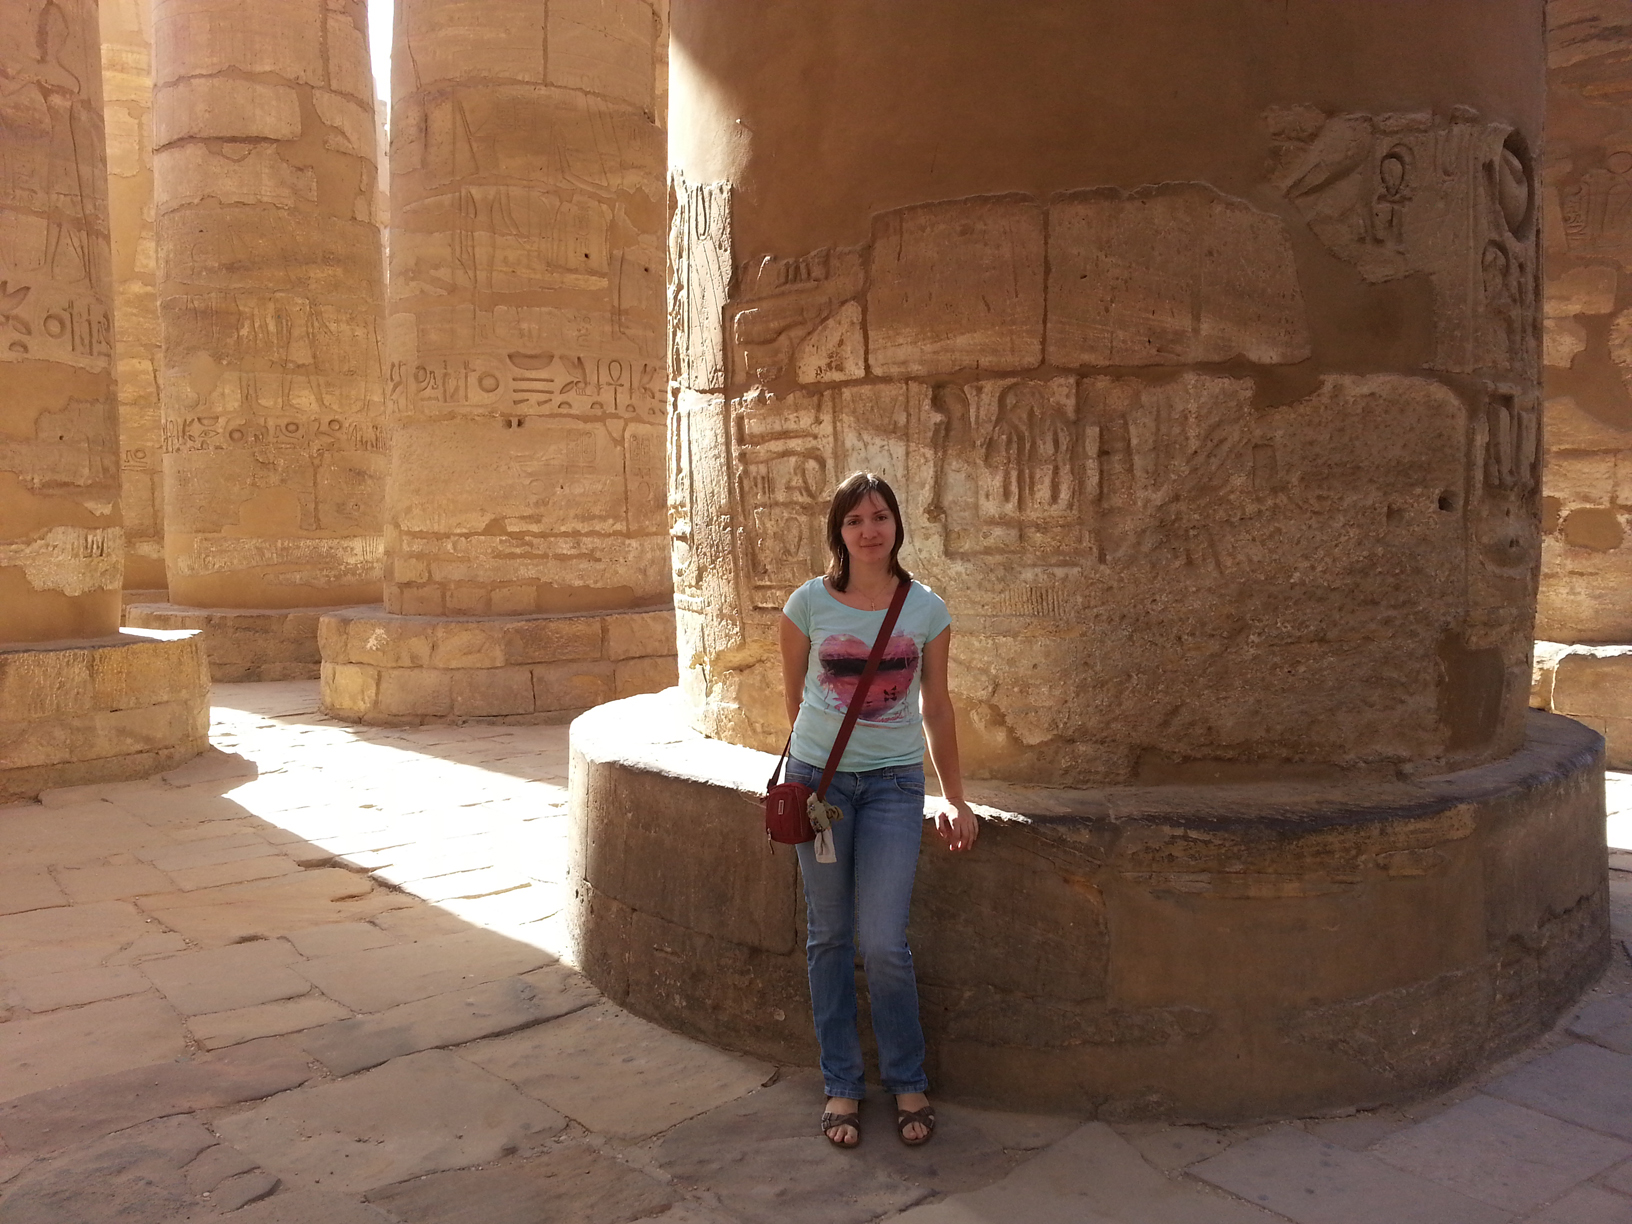 
Hypostyle hall in Karnak temple, Luxor